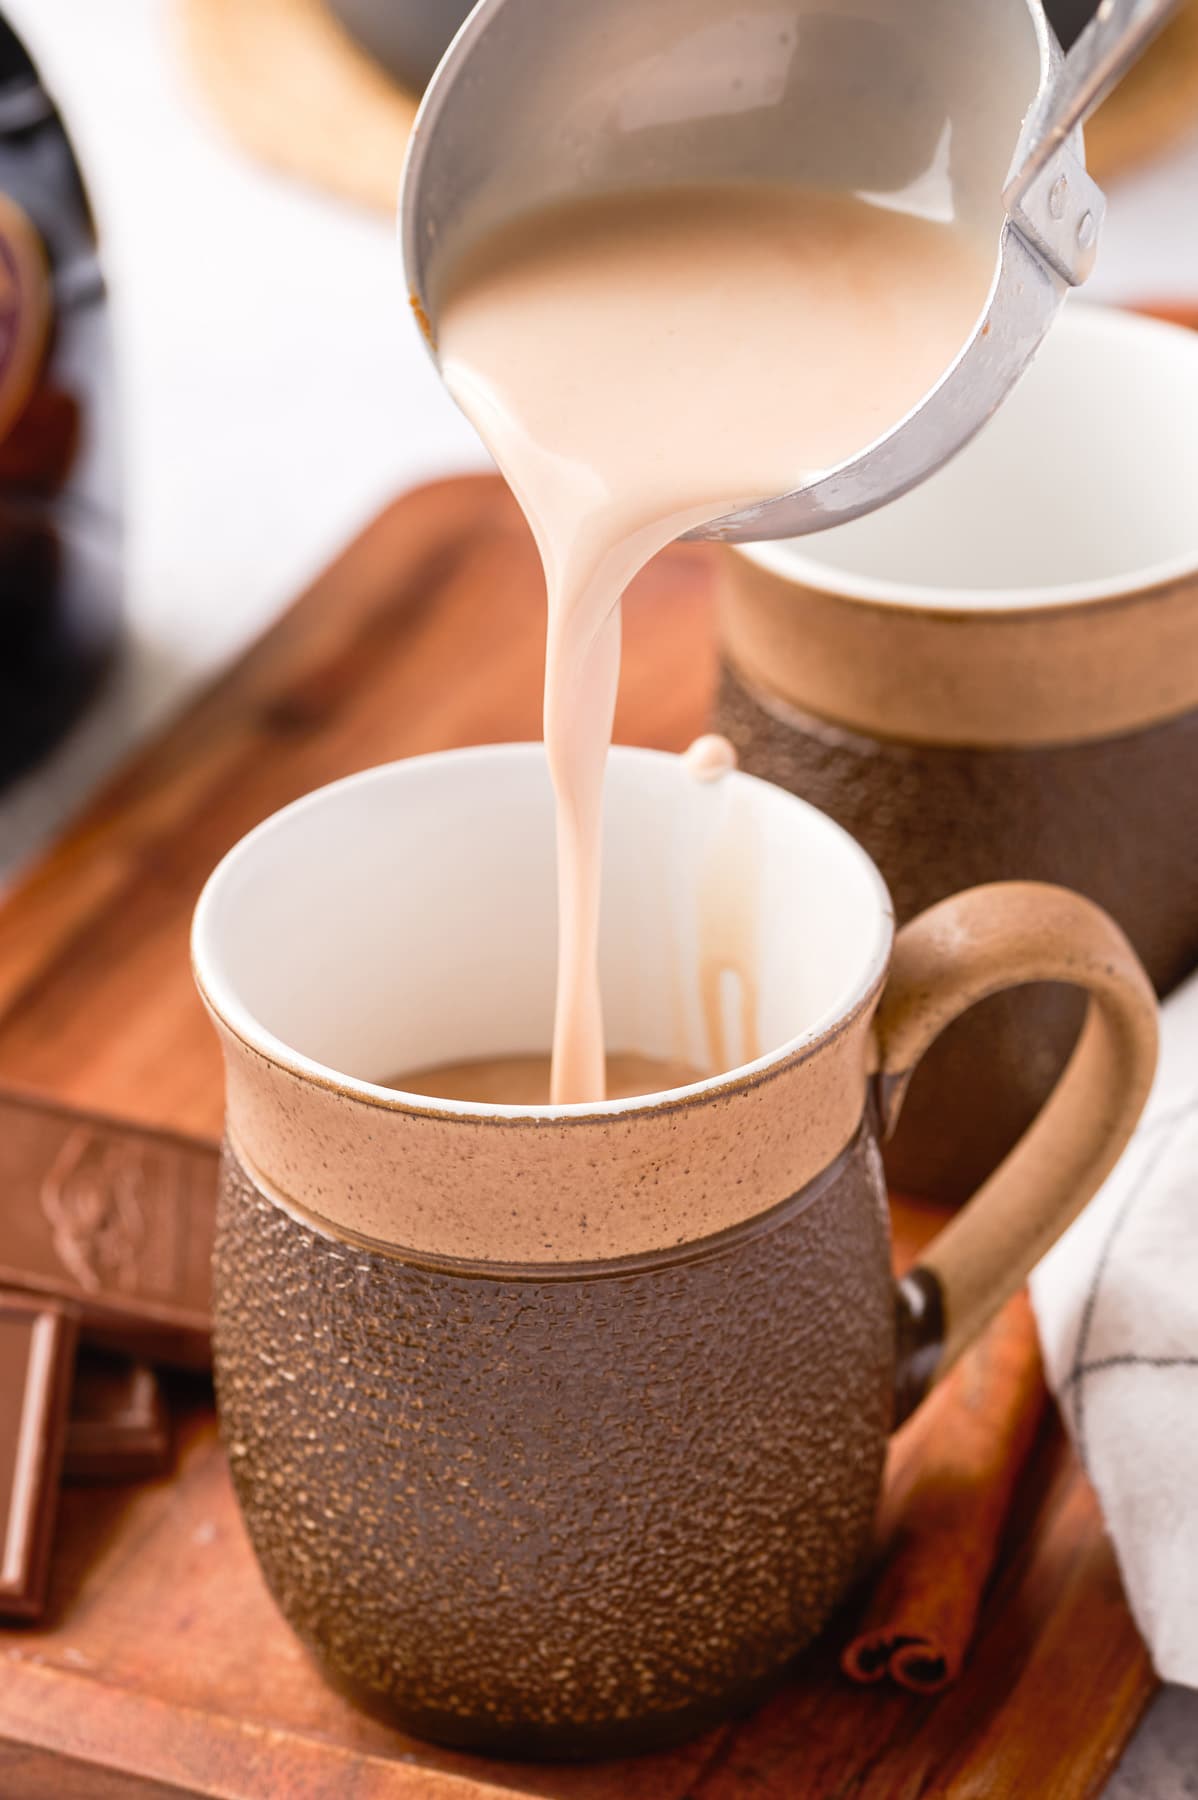 pouring hot chocolate into the mug